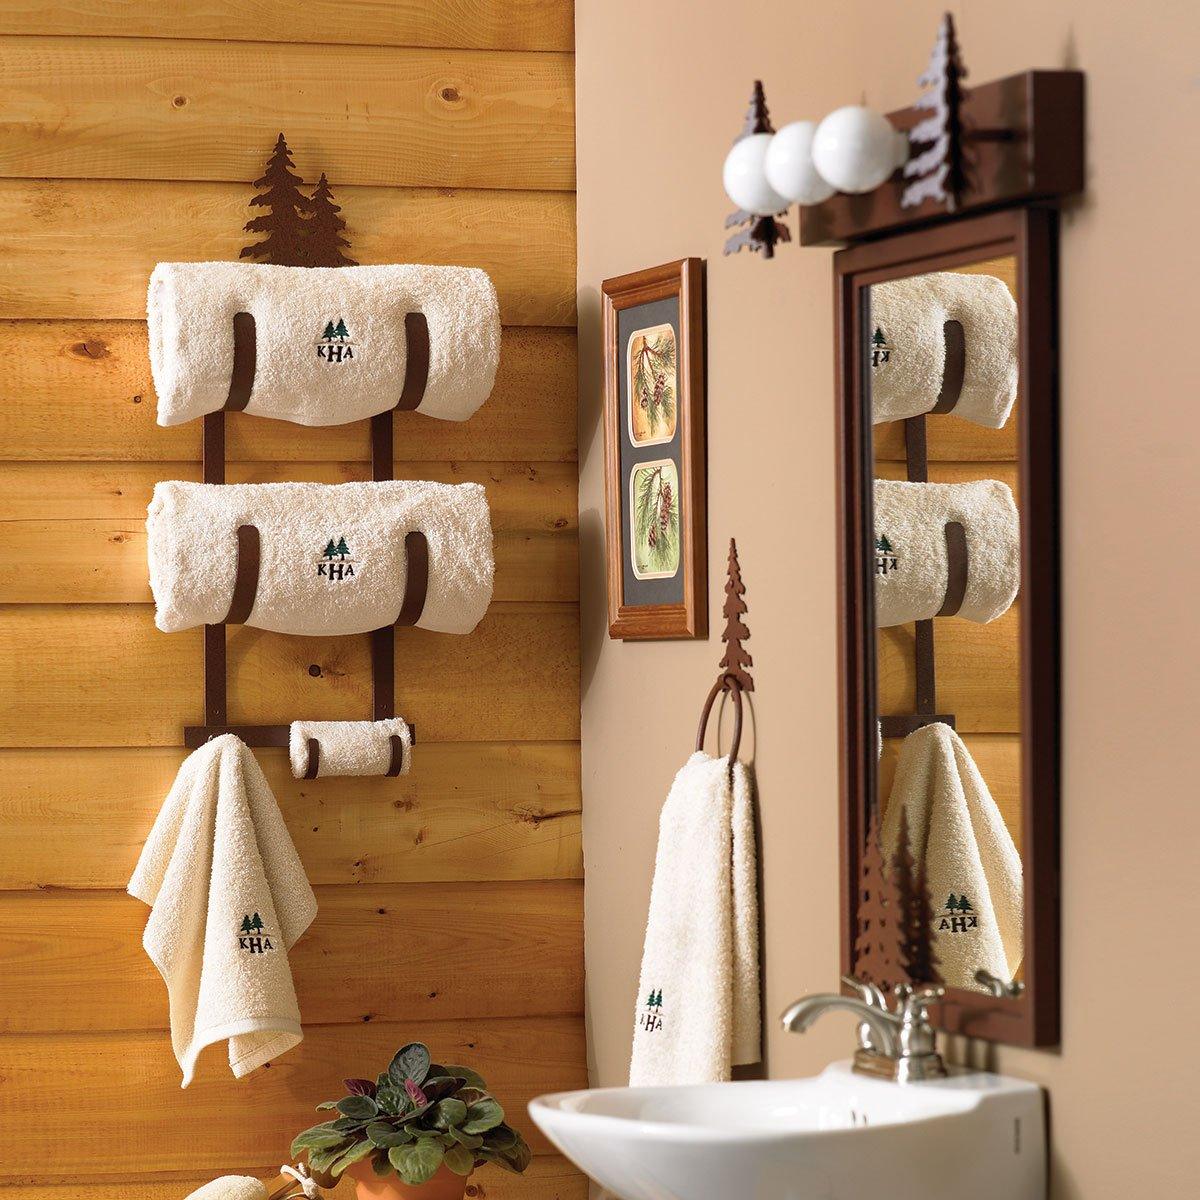 Log Cabin Towels